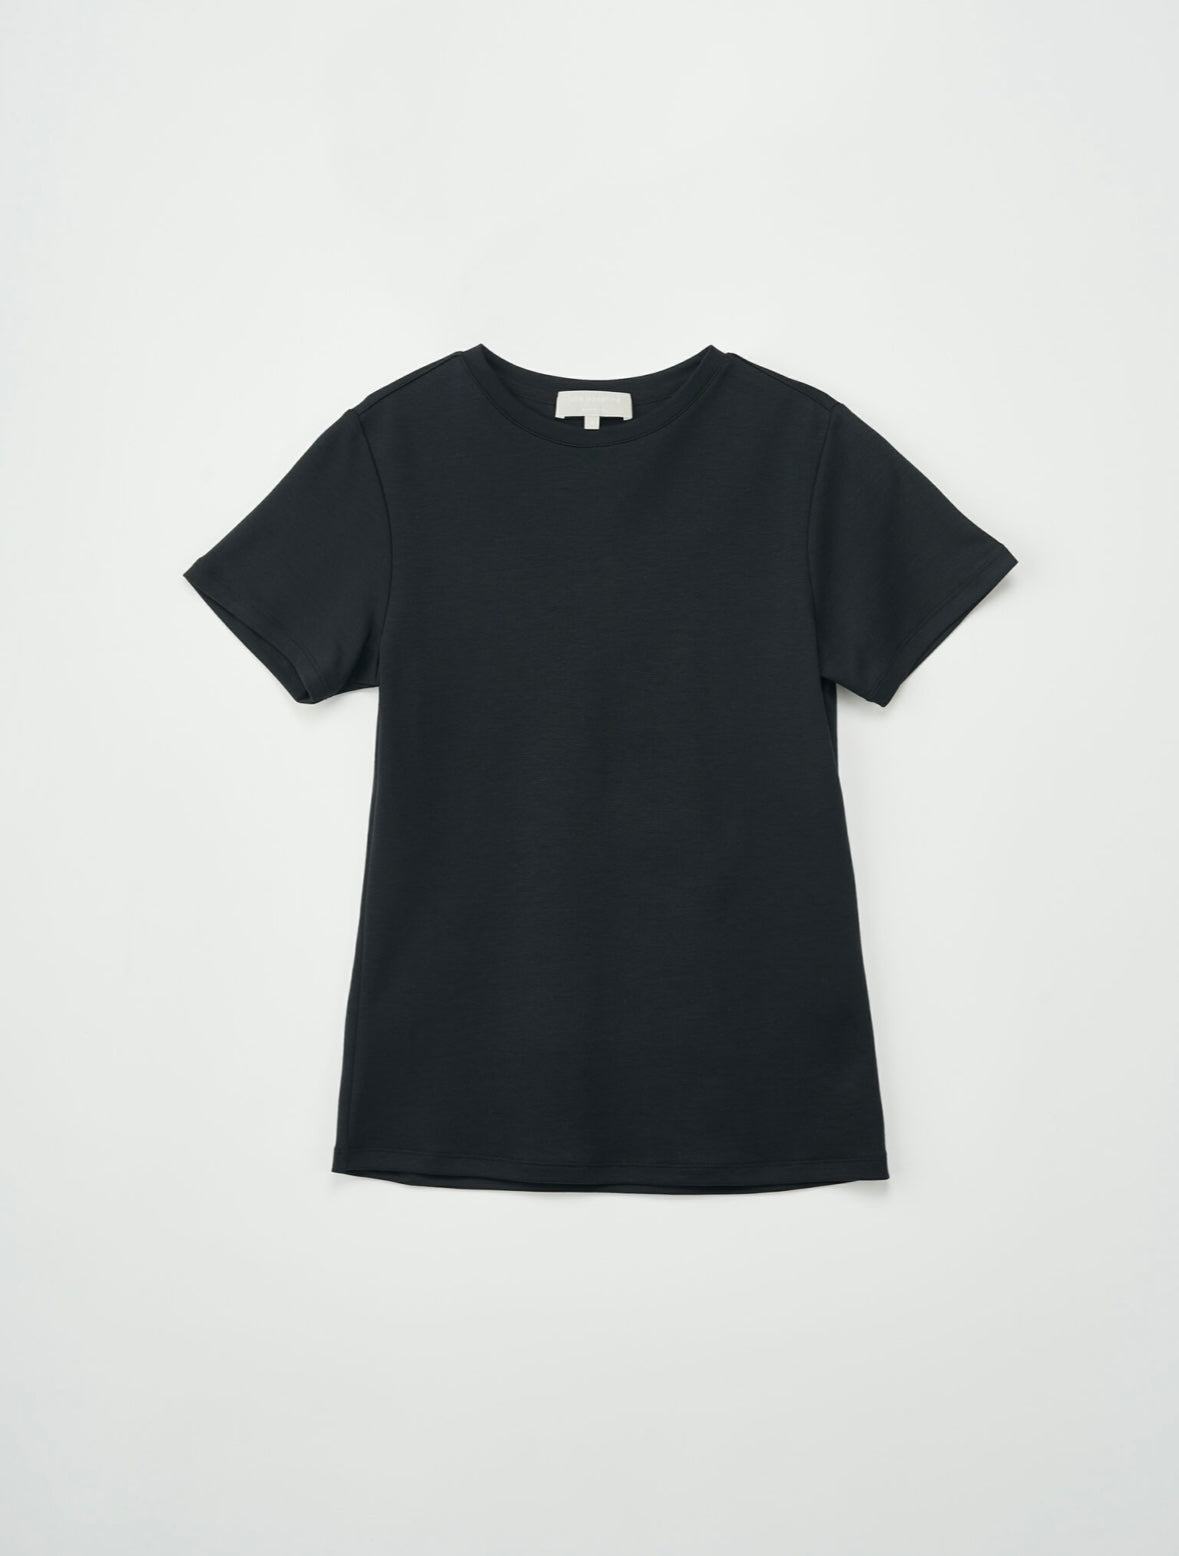 Julie Josephine Agnes t-shirt - Black